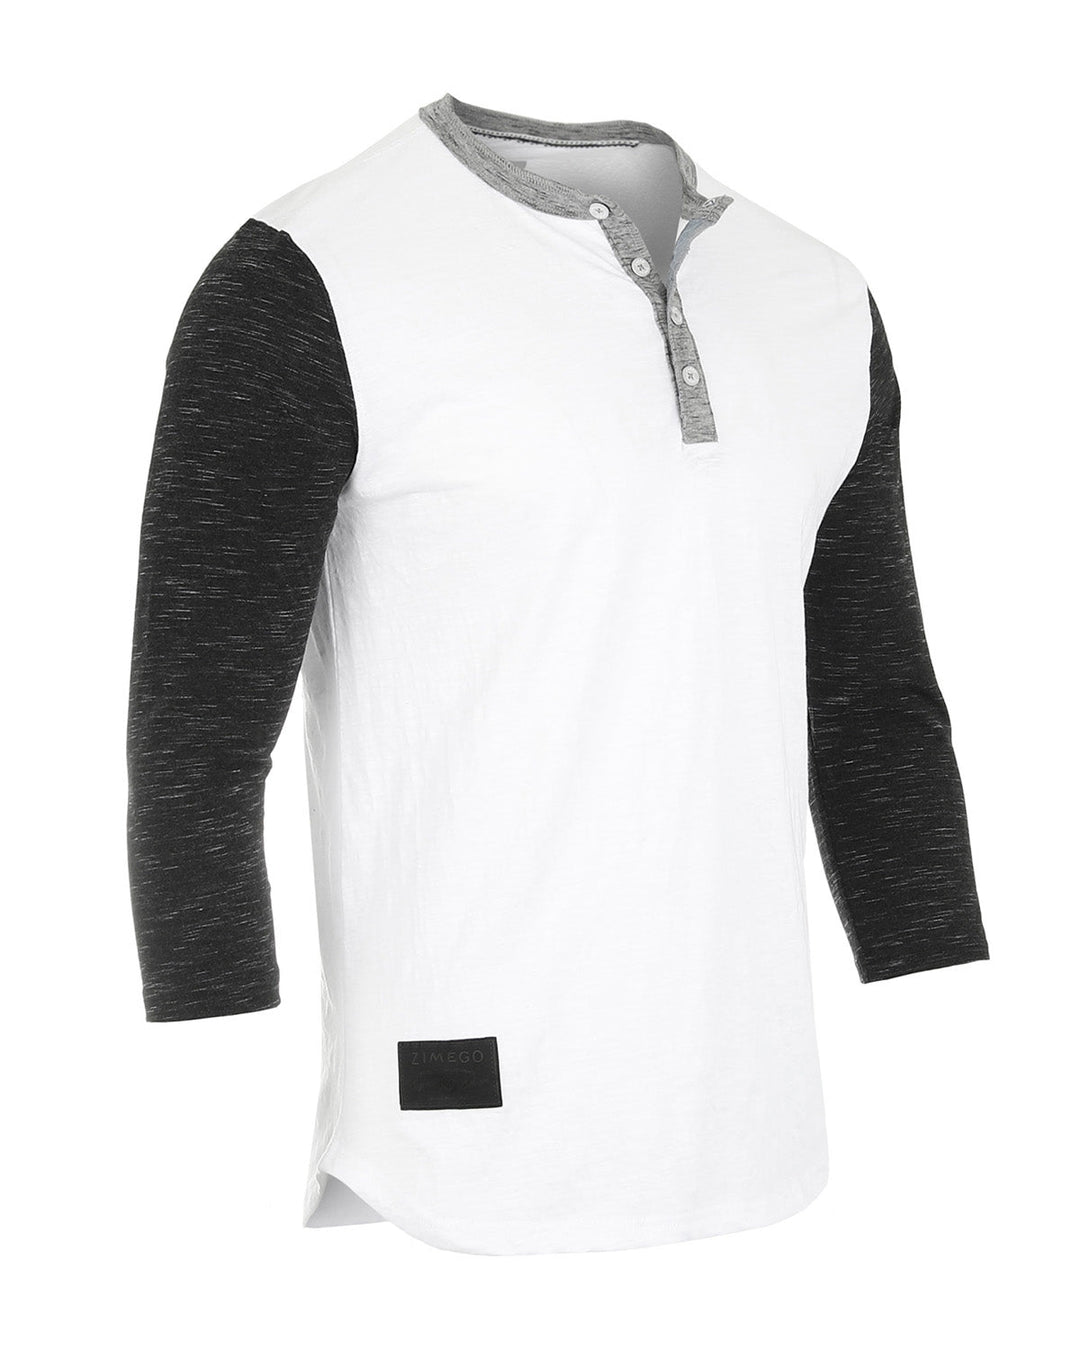 ZIMEGO Men's 3/4 Sleeve Black & White Baseball Henley – Casual Athletic Button Crewneck Shirts-2